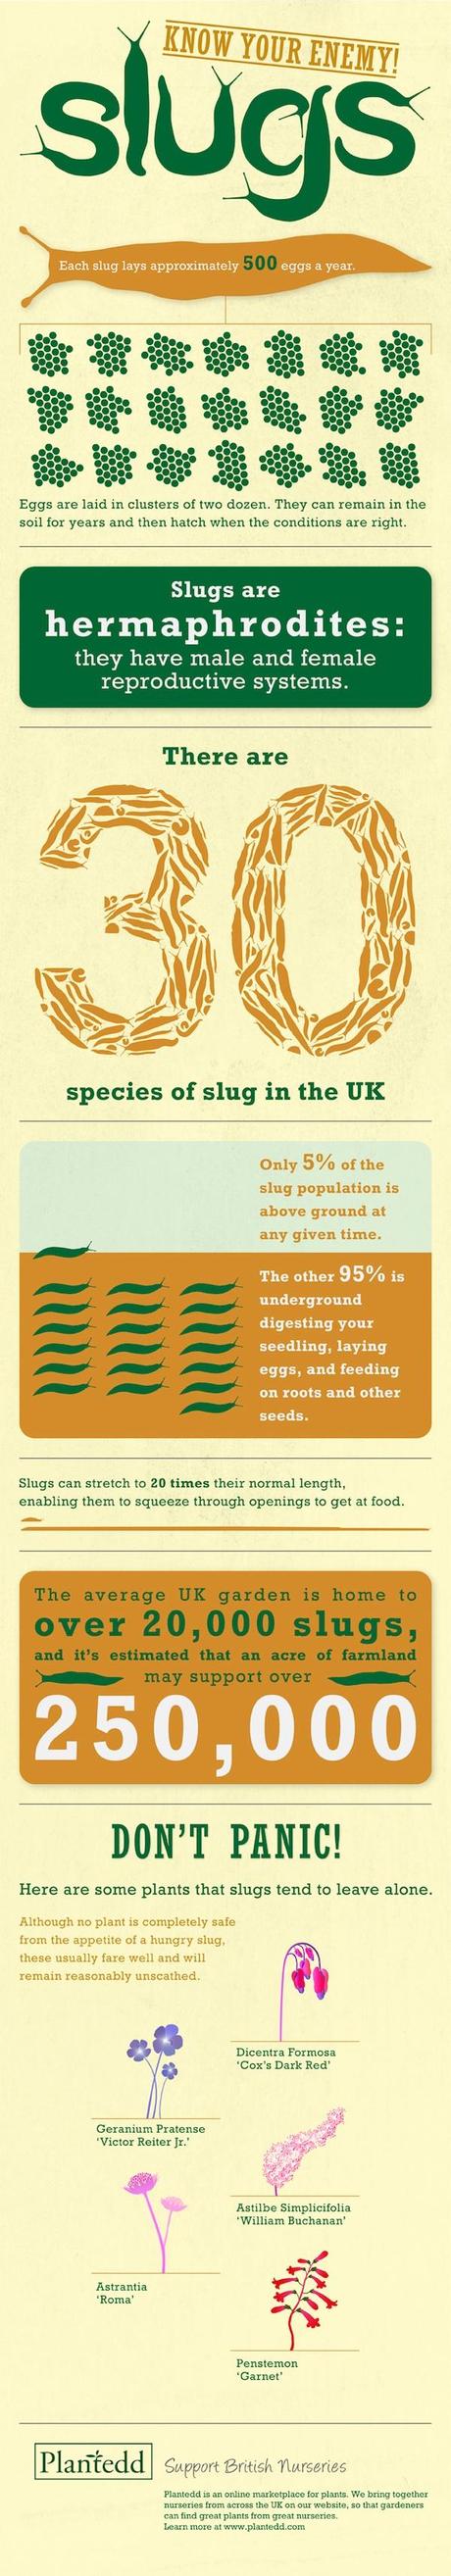 Slug infographic